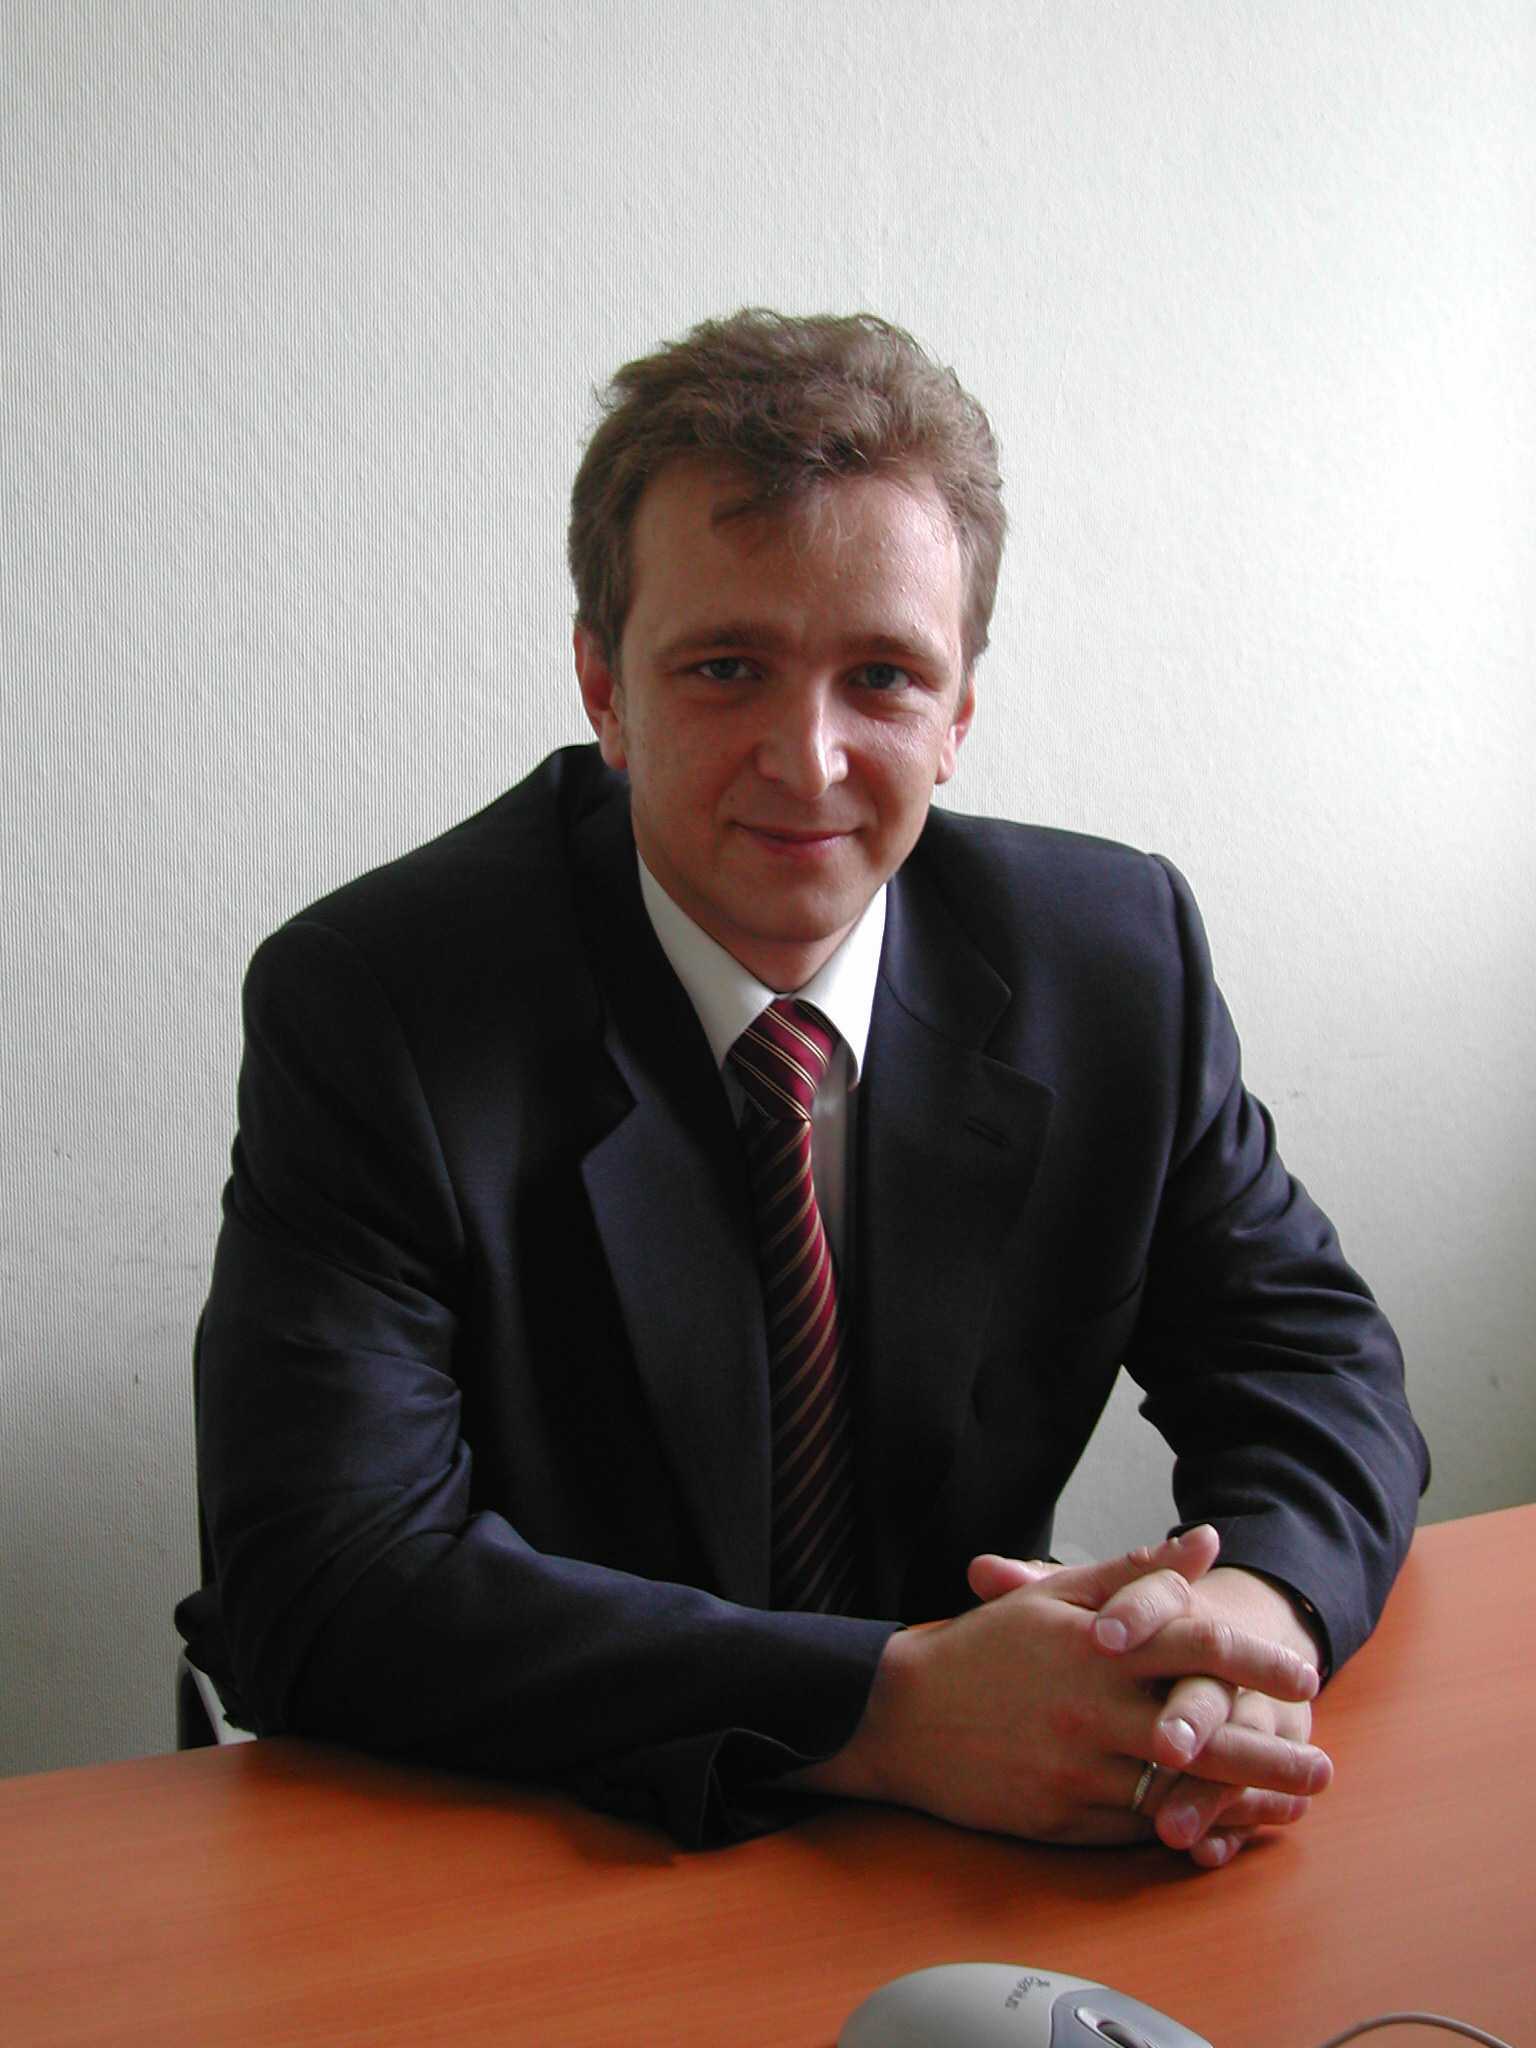 Андрей Кузнецов 